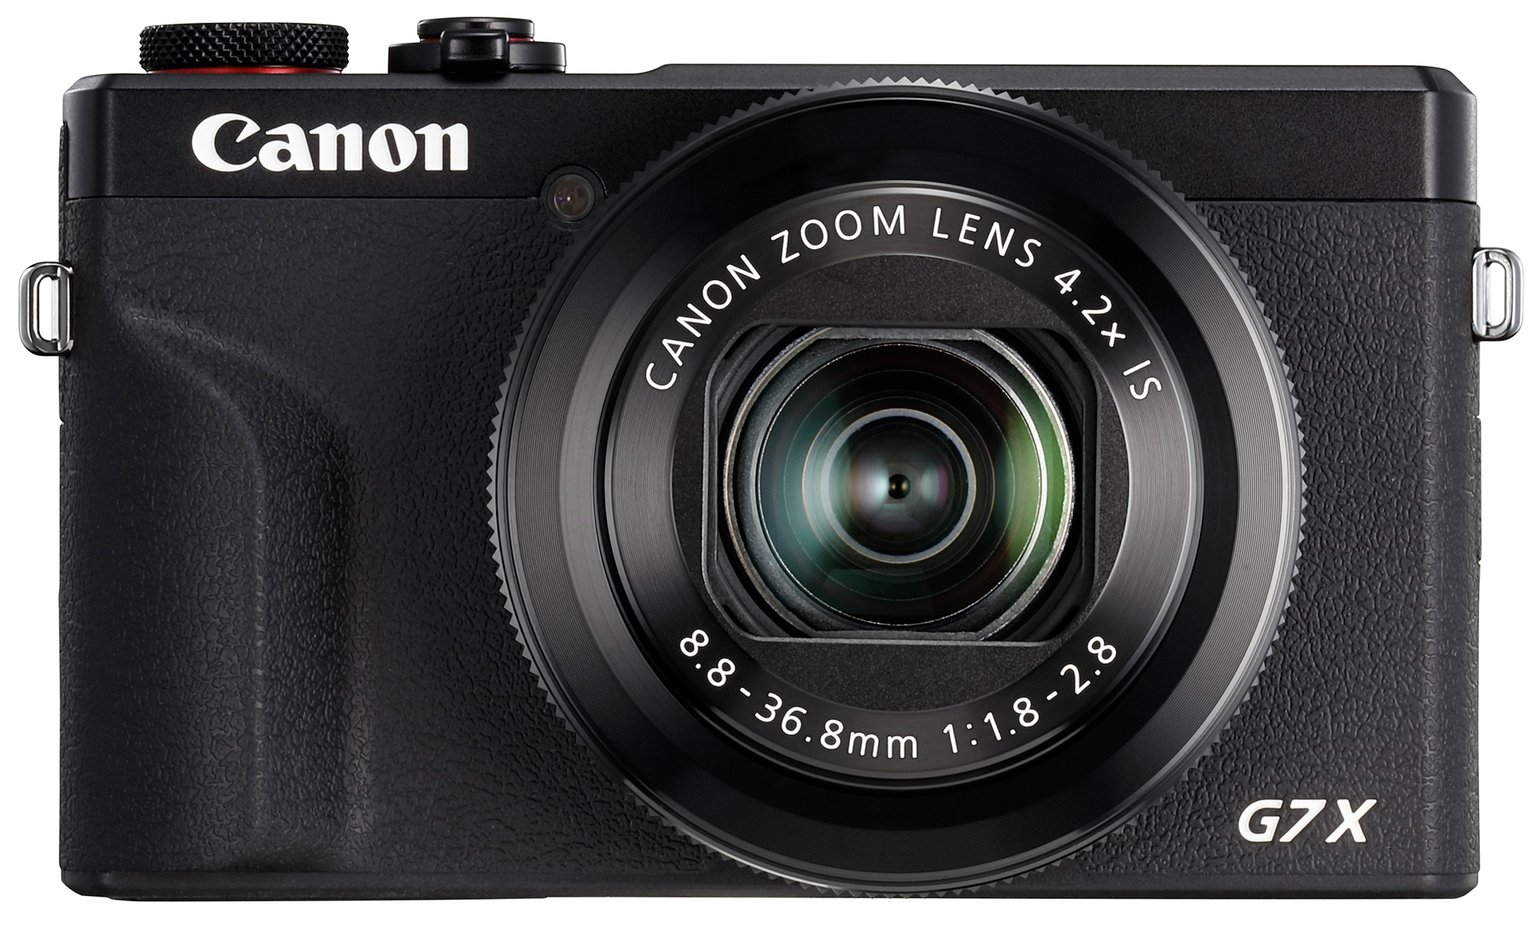 Canon PowerShot G7X Mark III Premium Compact Digital Camera Review